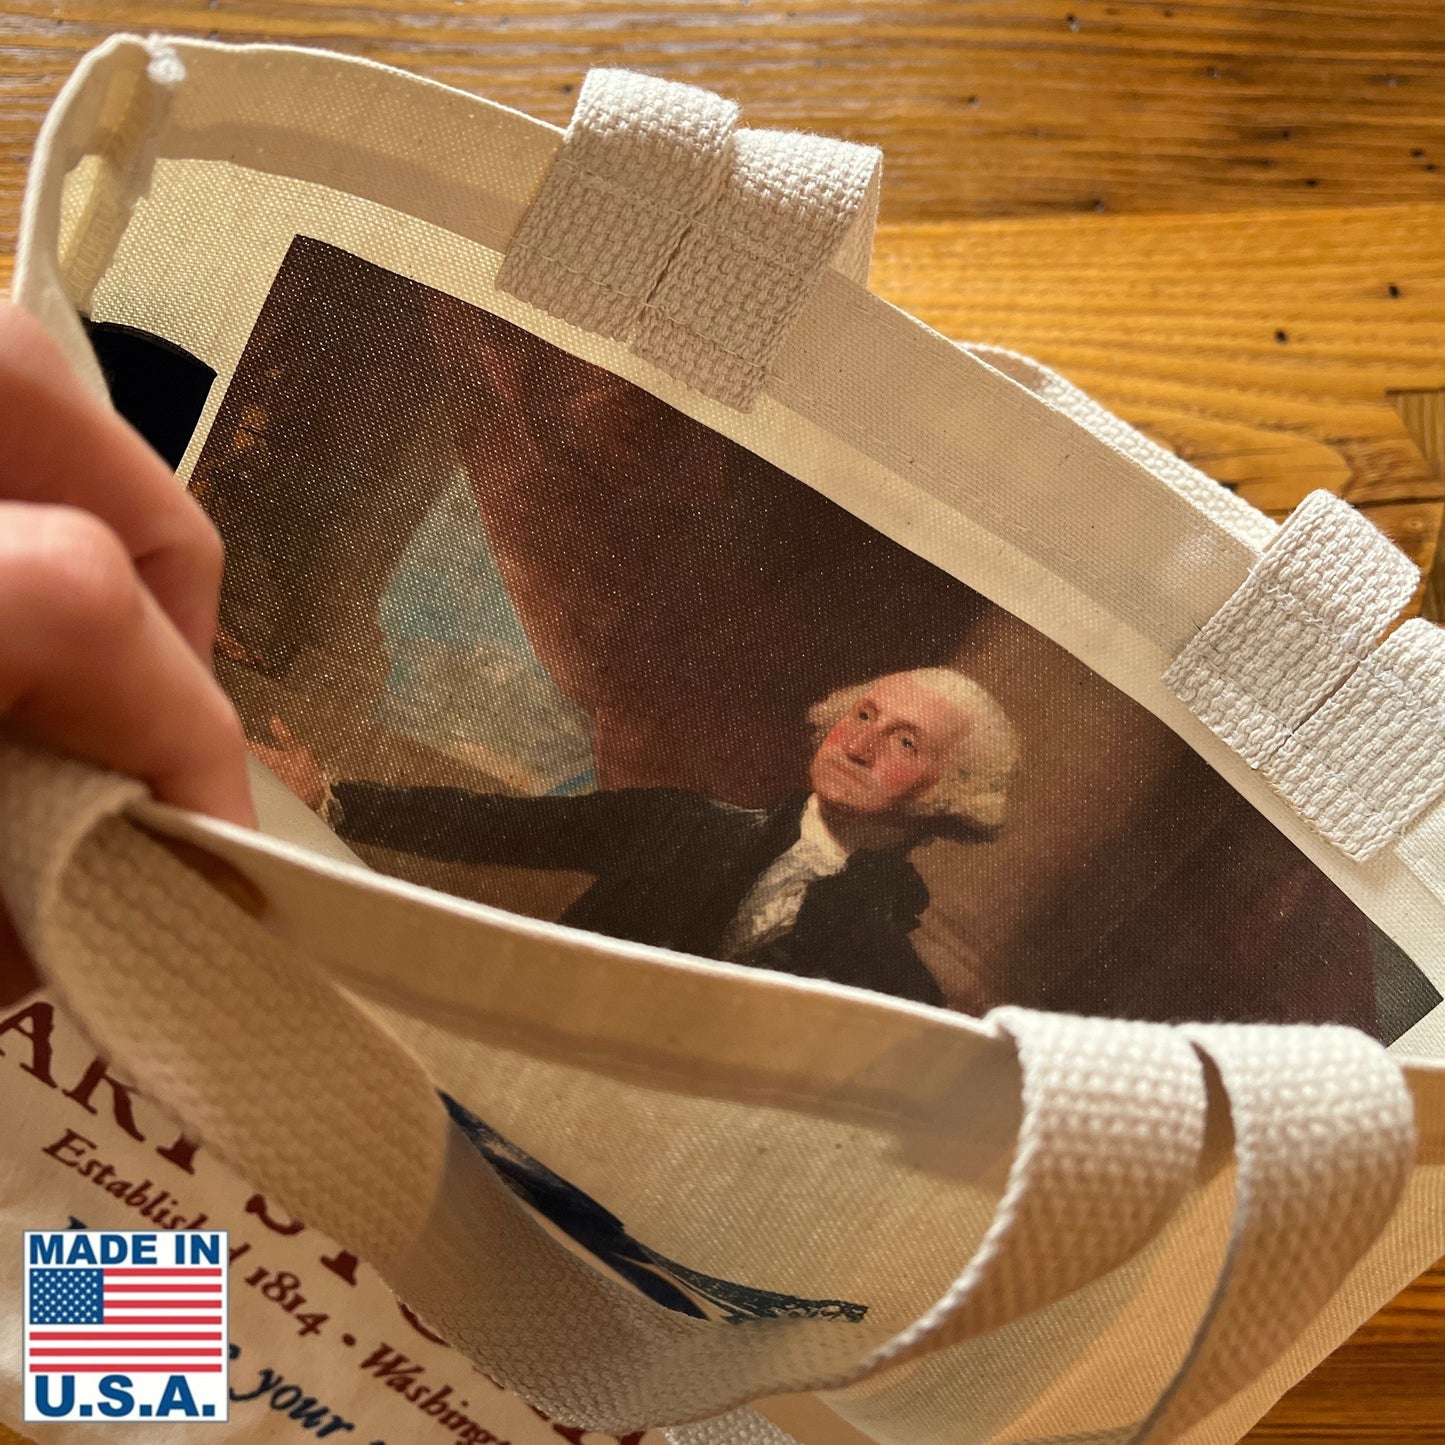 Dolley Madison Tote Bag with Washington Portrait Inside